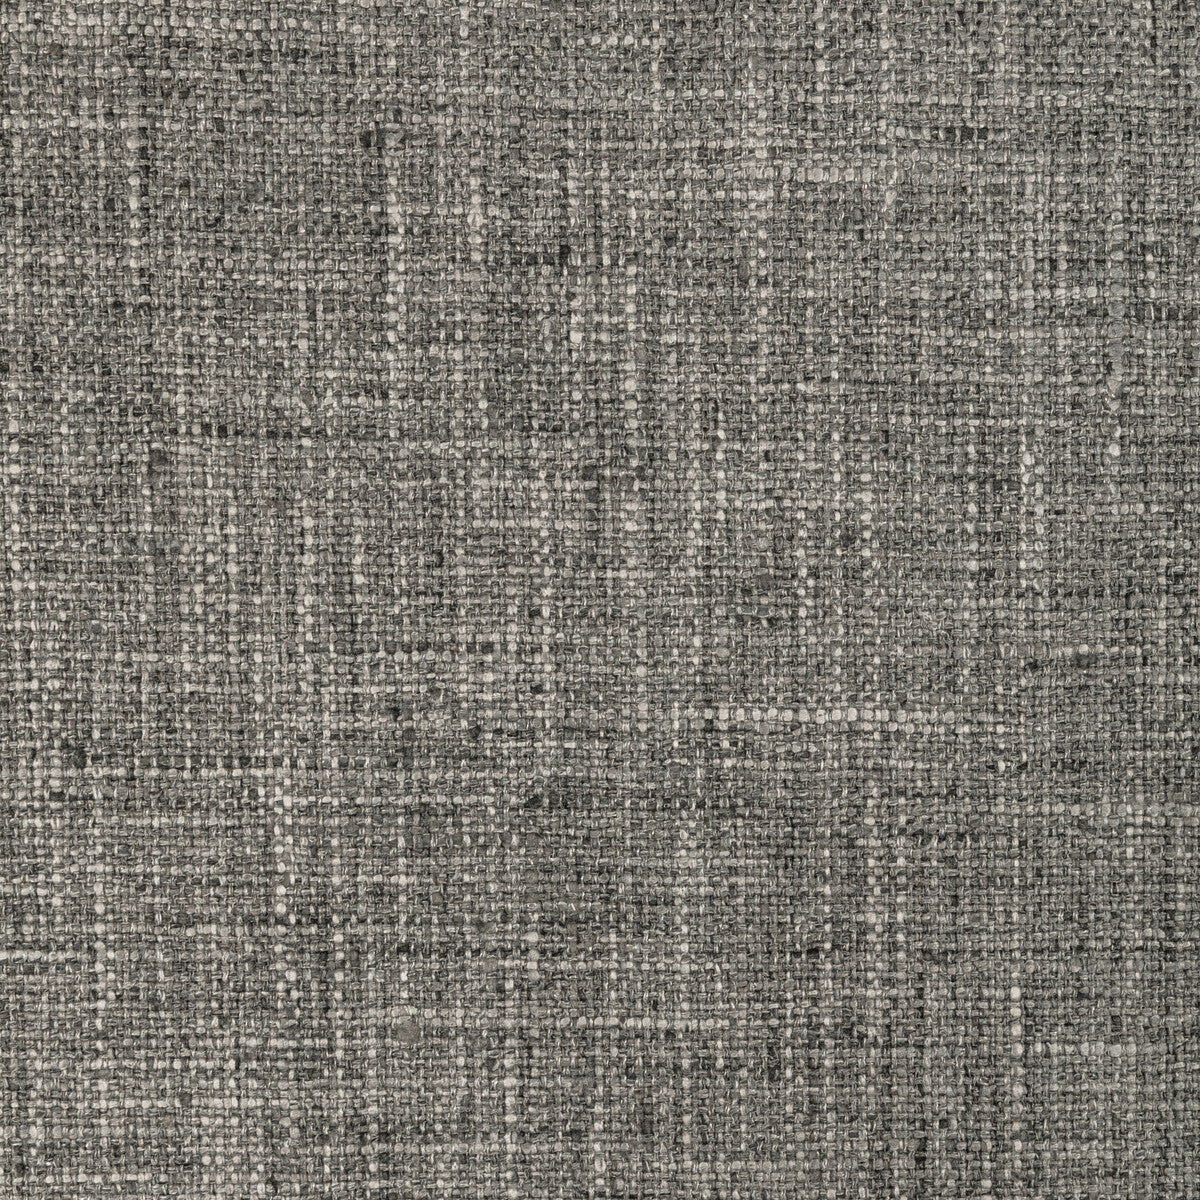 Kravet Smart fabric in 34083-1121 color - pattern 34083.1121.0 - by Kravet Smart